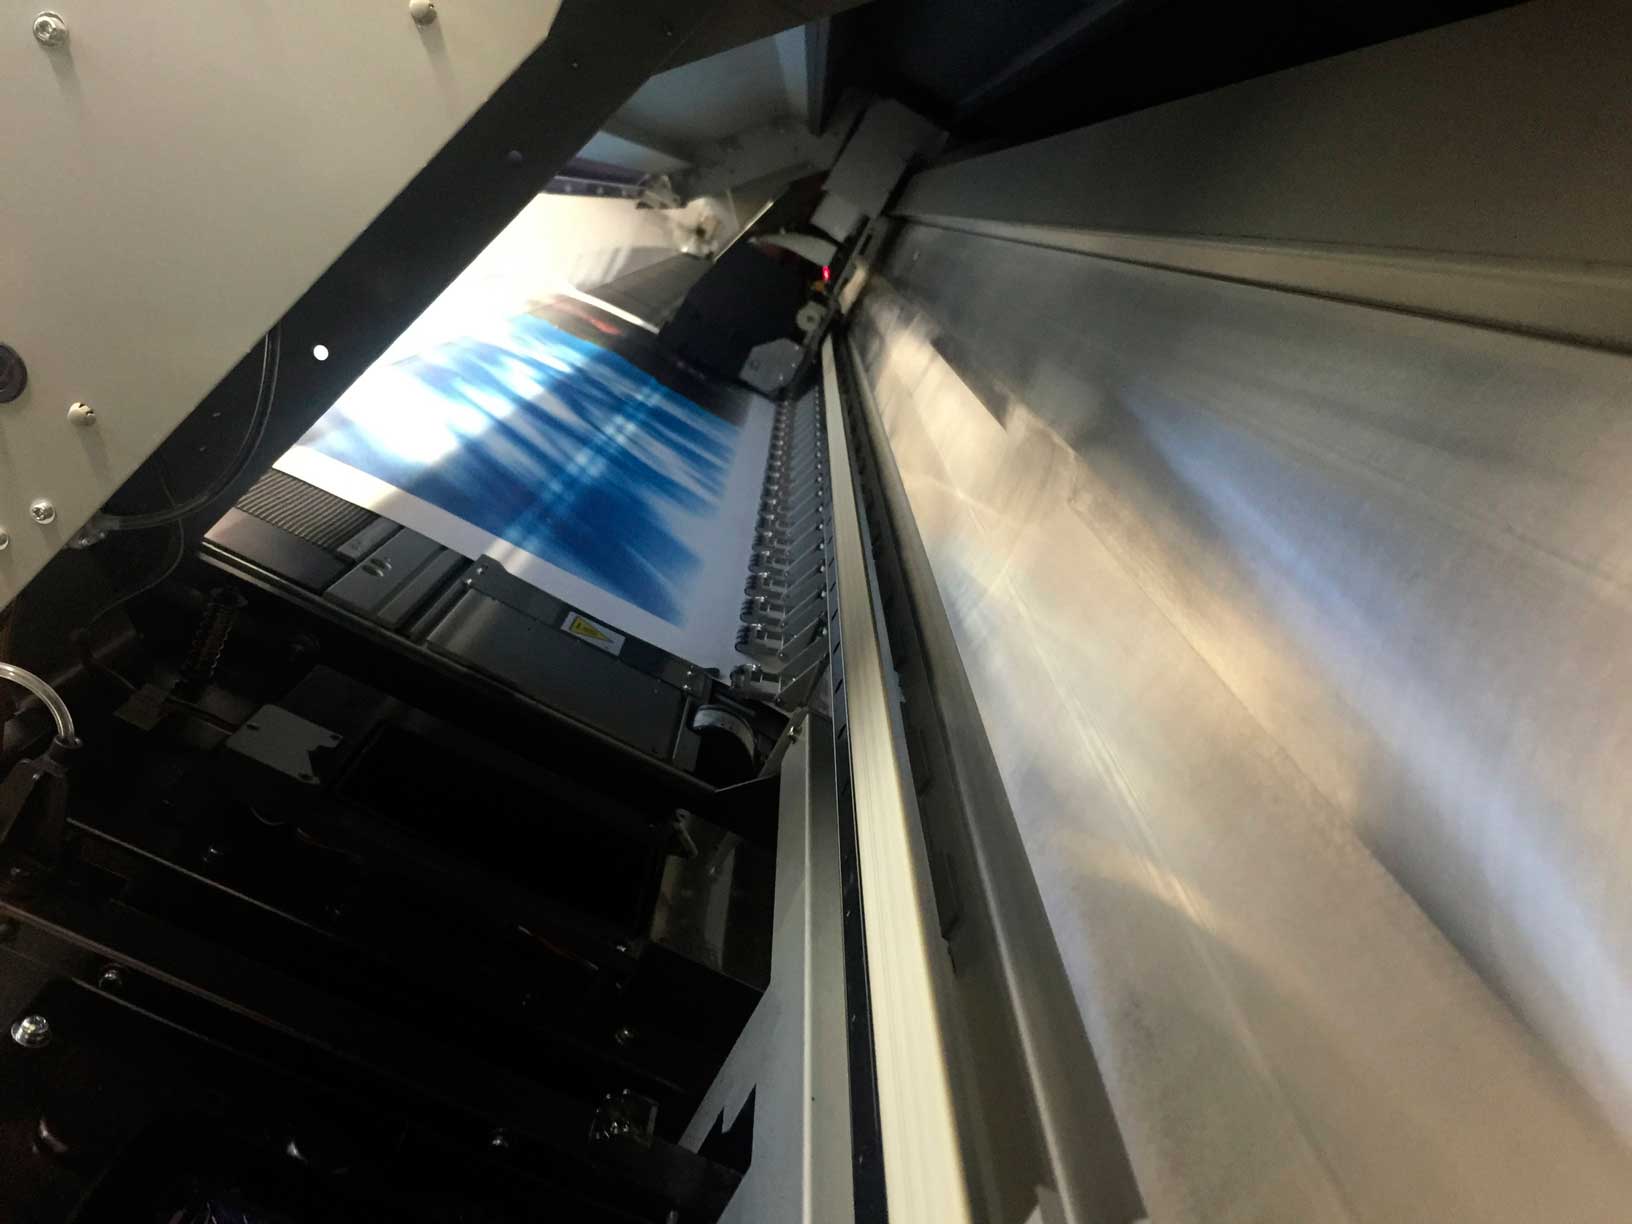 Lenticular Printing